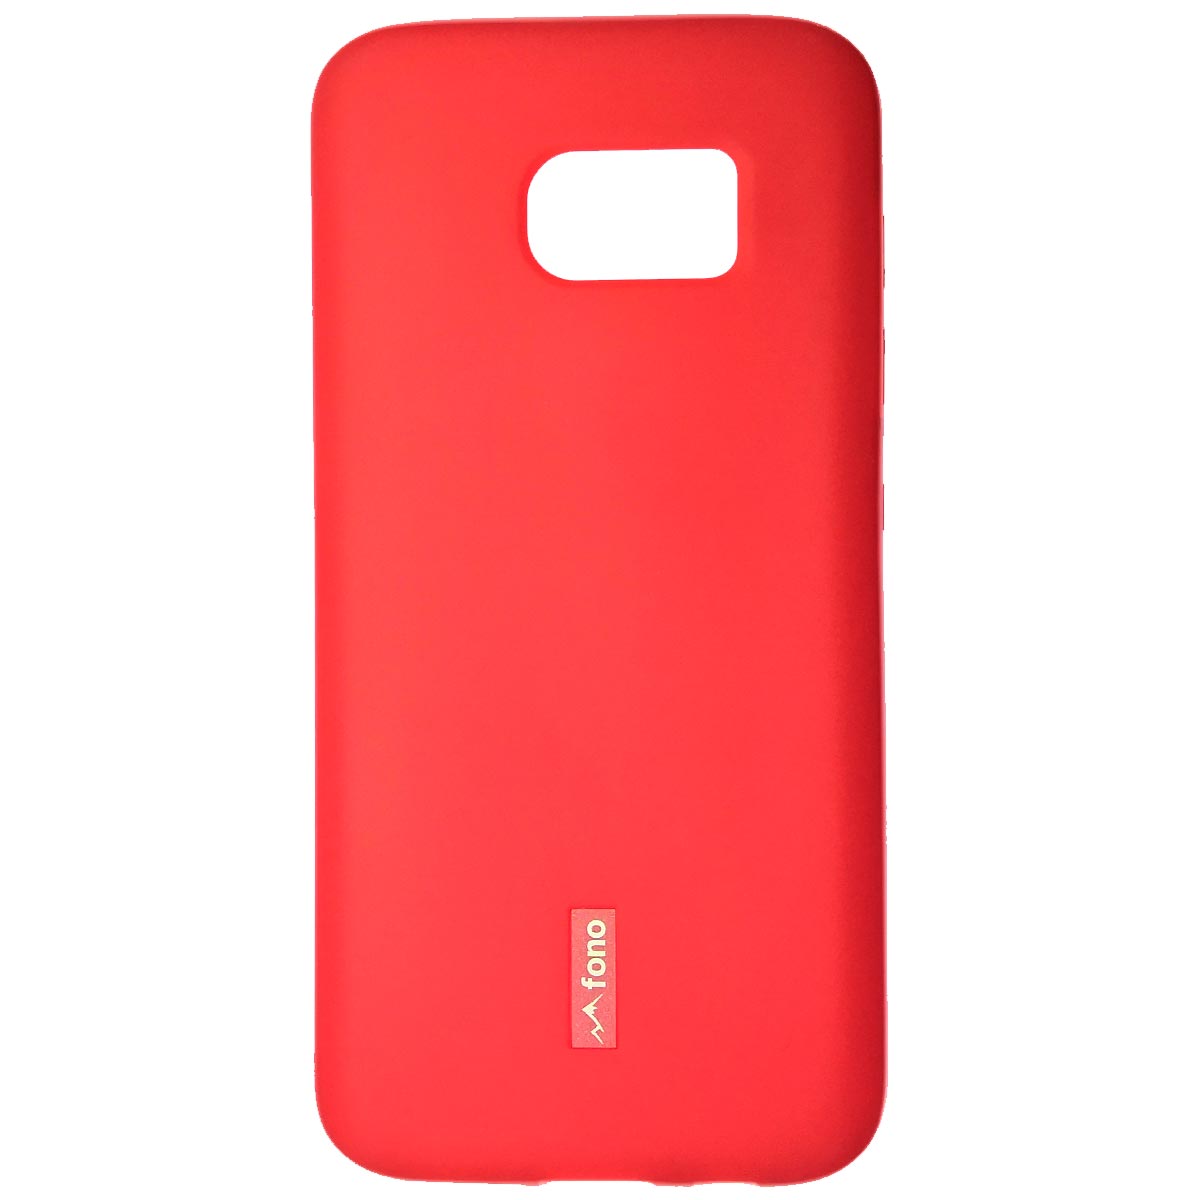 Чехол накладка FONO для SAMSUNG Galaxy S7 Edge (SM-G935), силикон, пленка, цвет красный